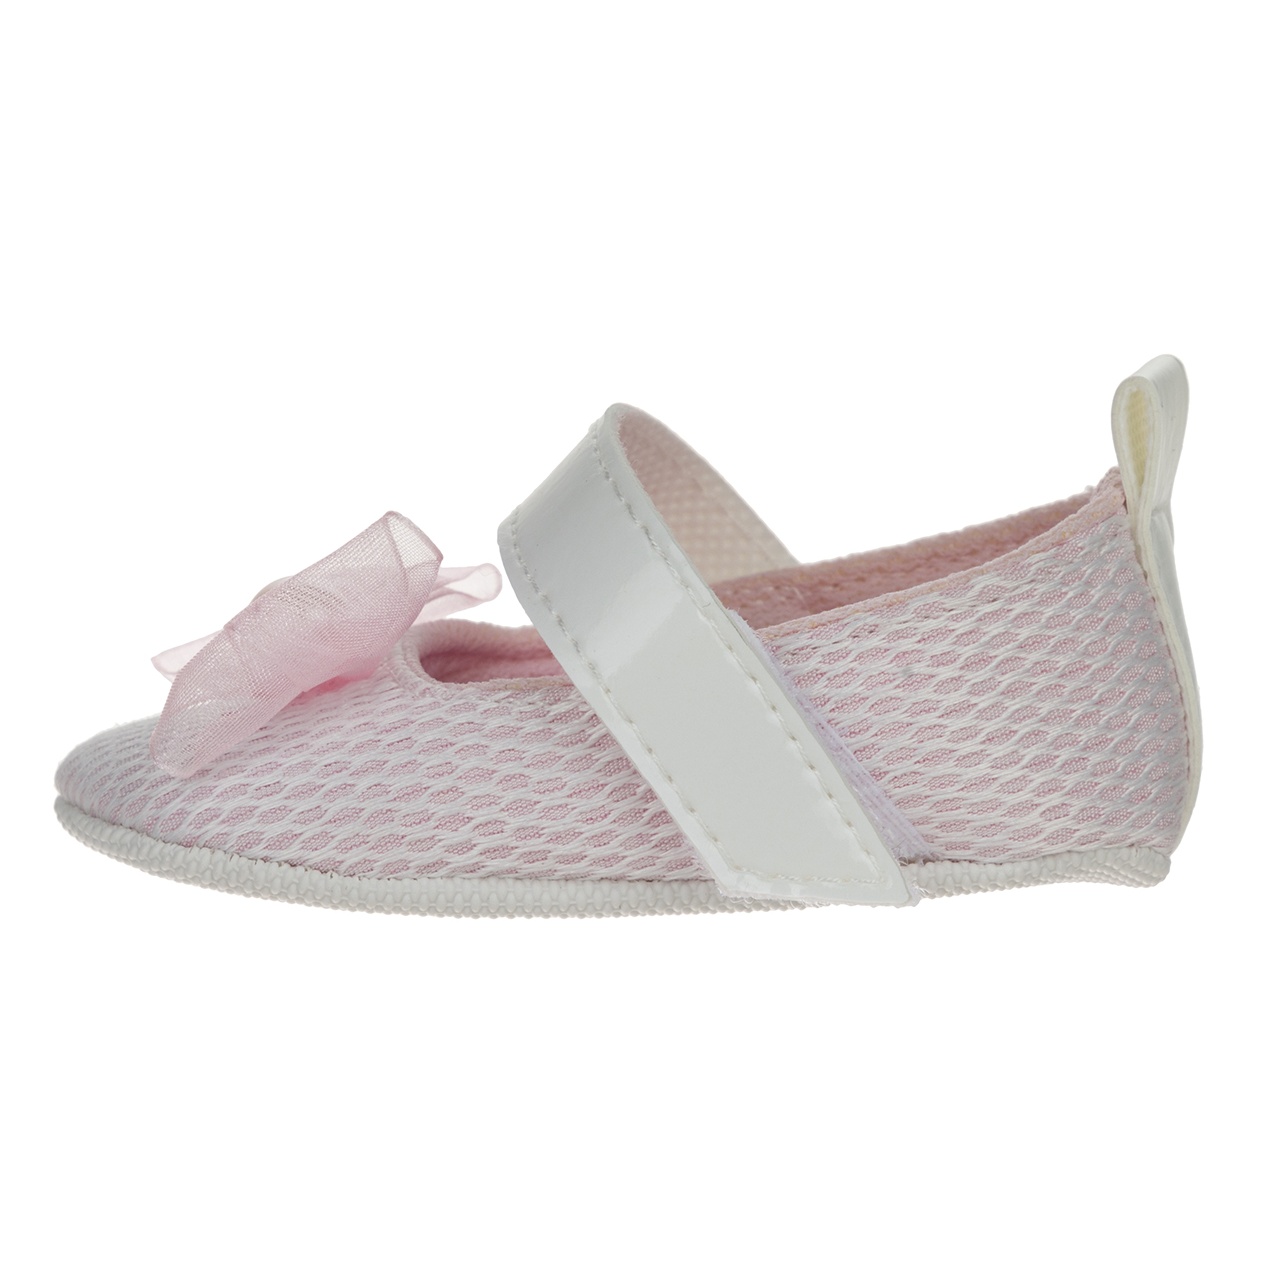 کفش نوزادی اسکار بیبی مدل Pink005